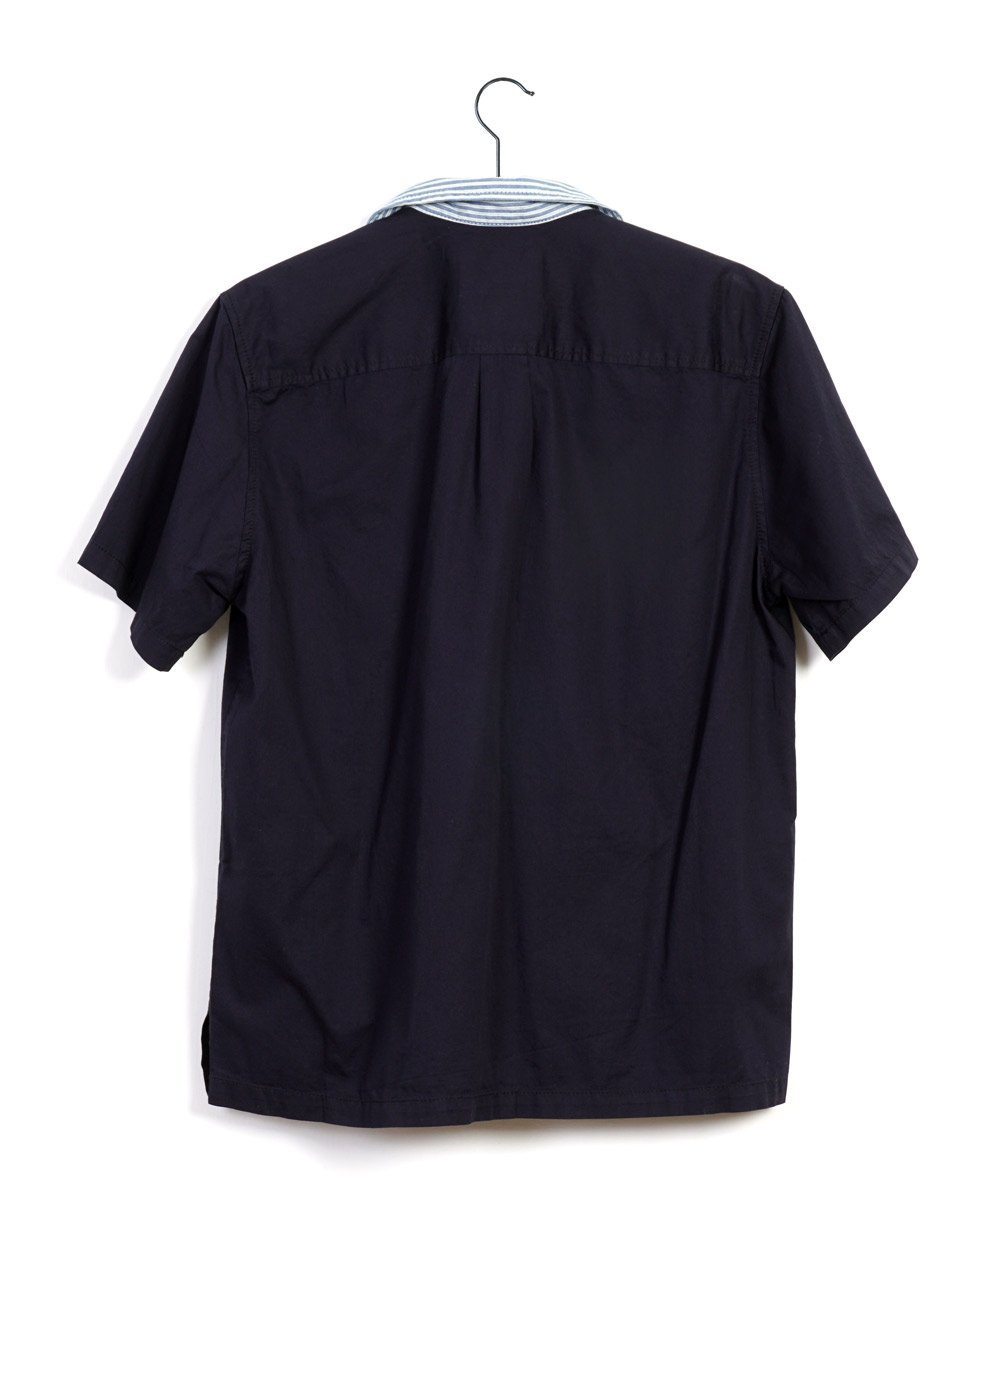 PHILLIP | Short Sleeve Pull-On Shirt | Navy/Stripe -HANSEN Garments- HANSEN Garments